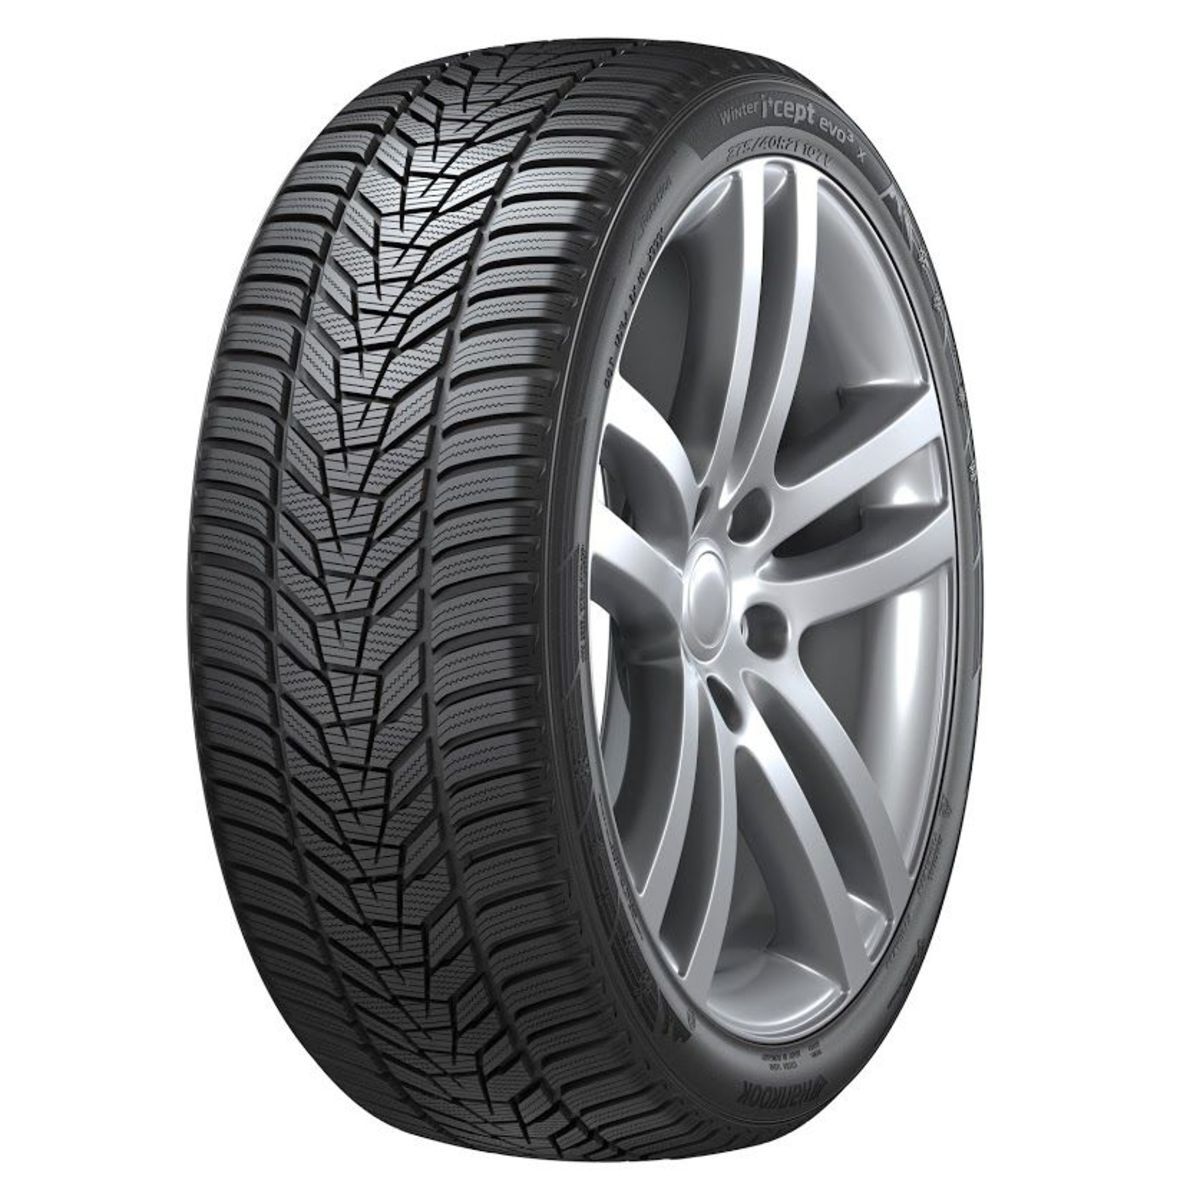 Neumáticos de invierno HANKOOK Winter i*cept evo3 X W330A 235/50R18 XL 101V